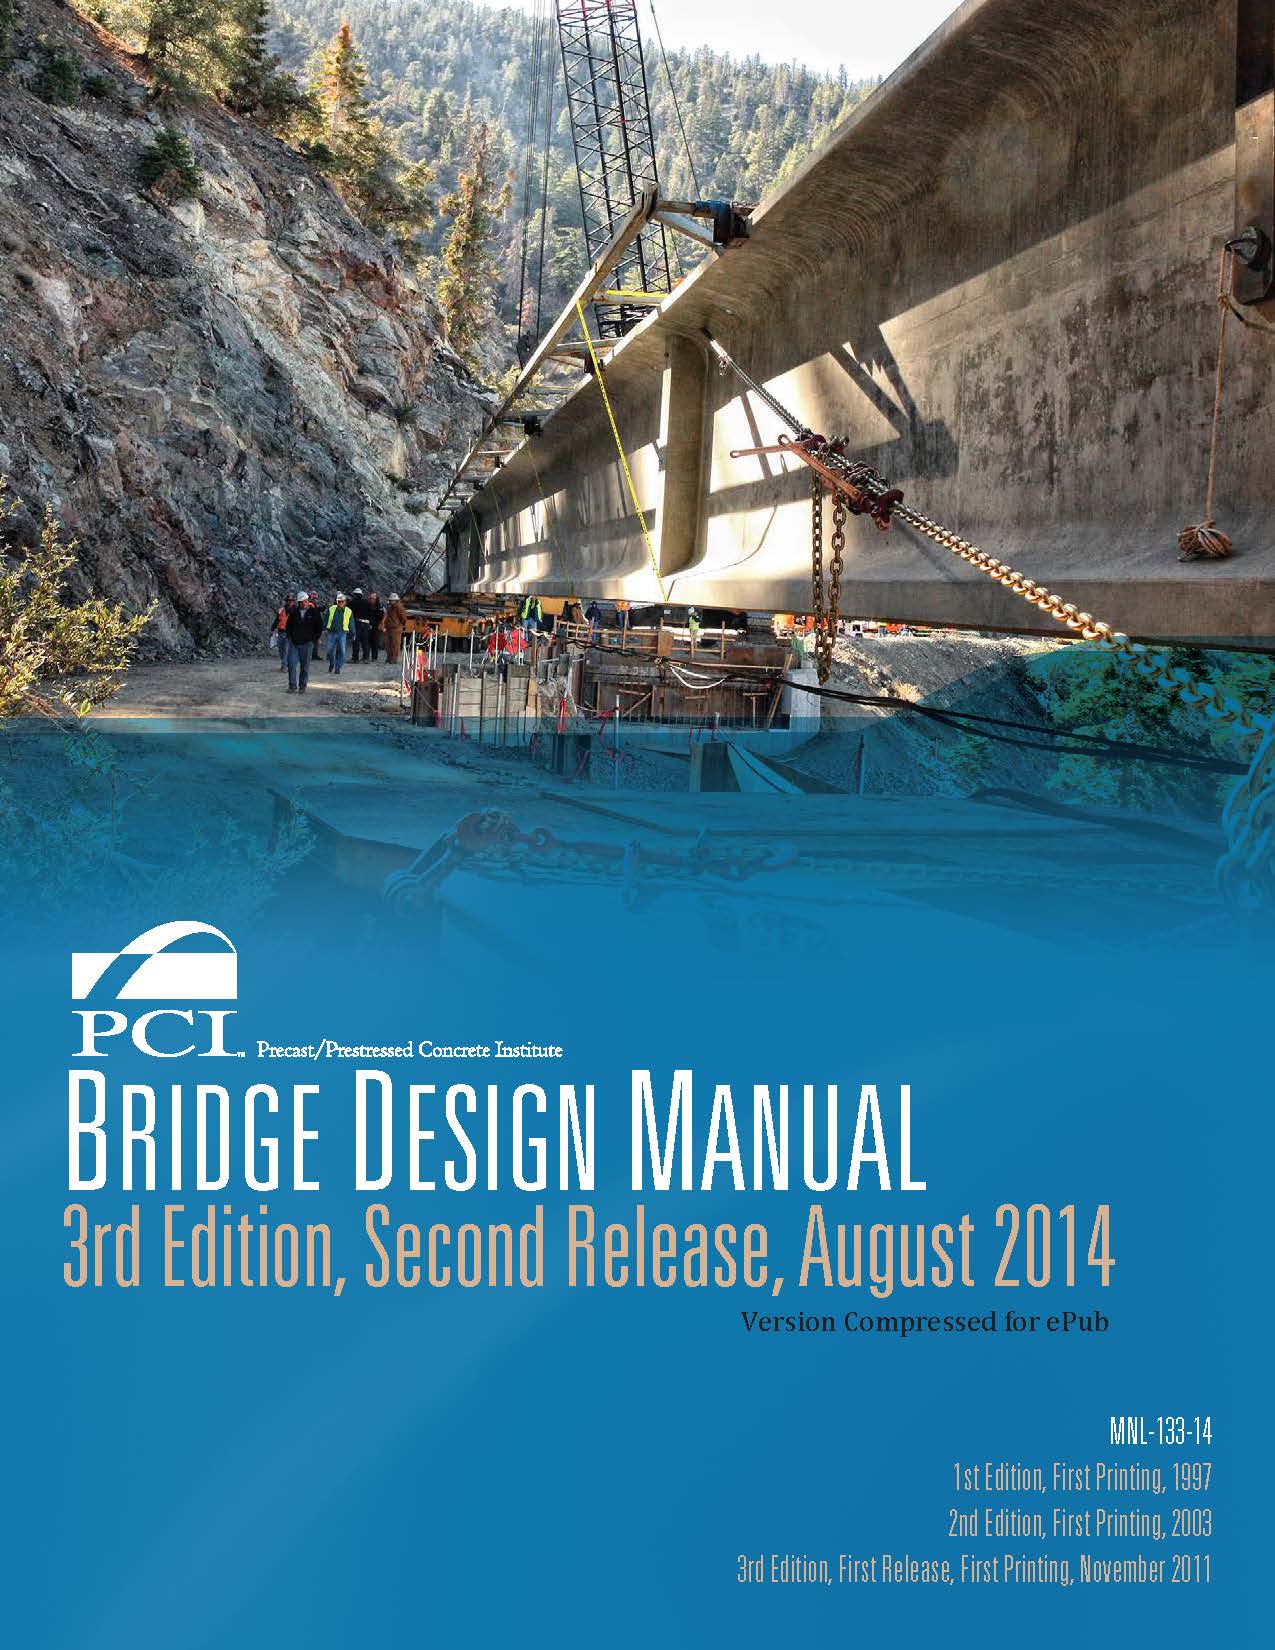 PCI Bridge Design Manual, 3rd Edition